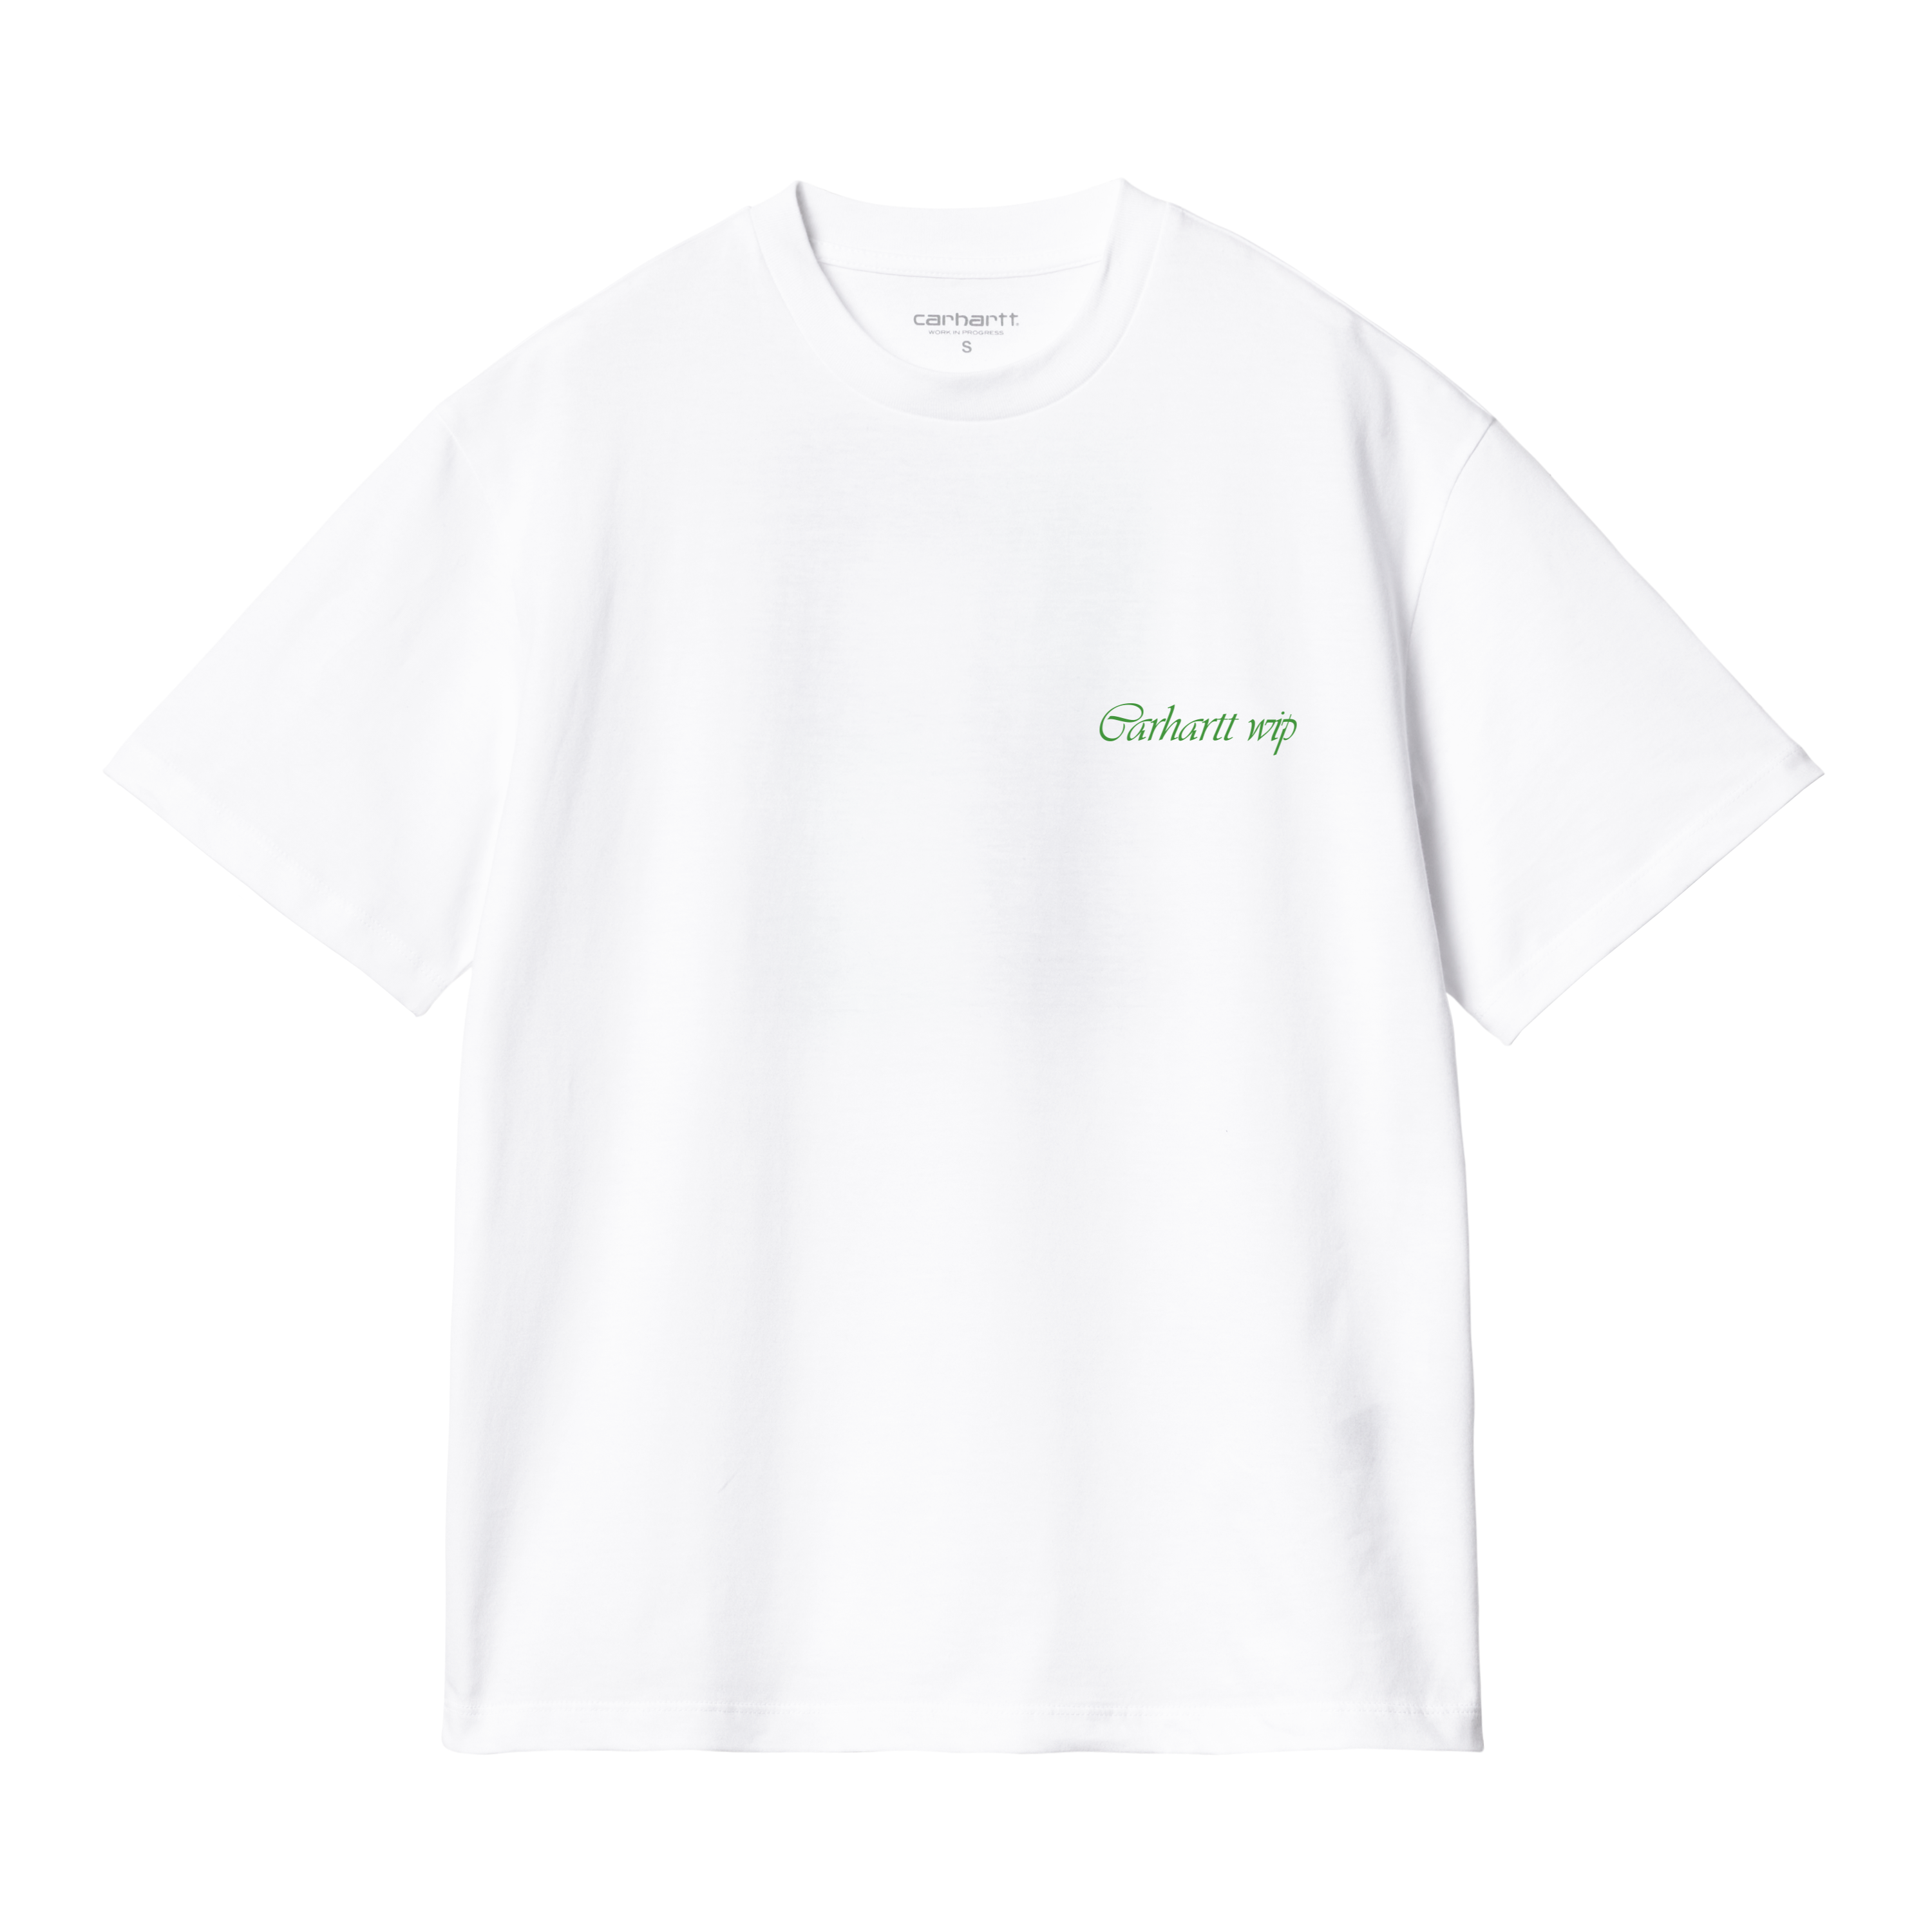 Carhartt WIP Women’s Short Sleeve Work & Play T-Shirt in White